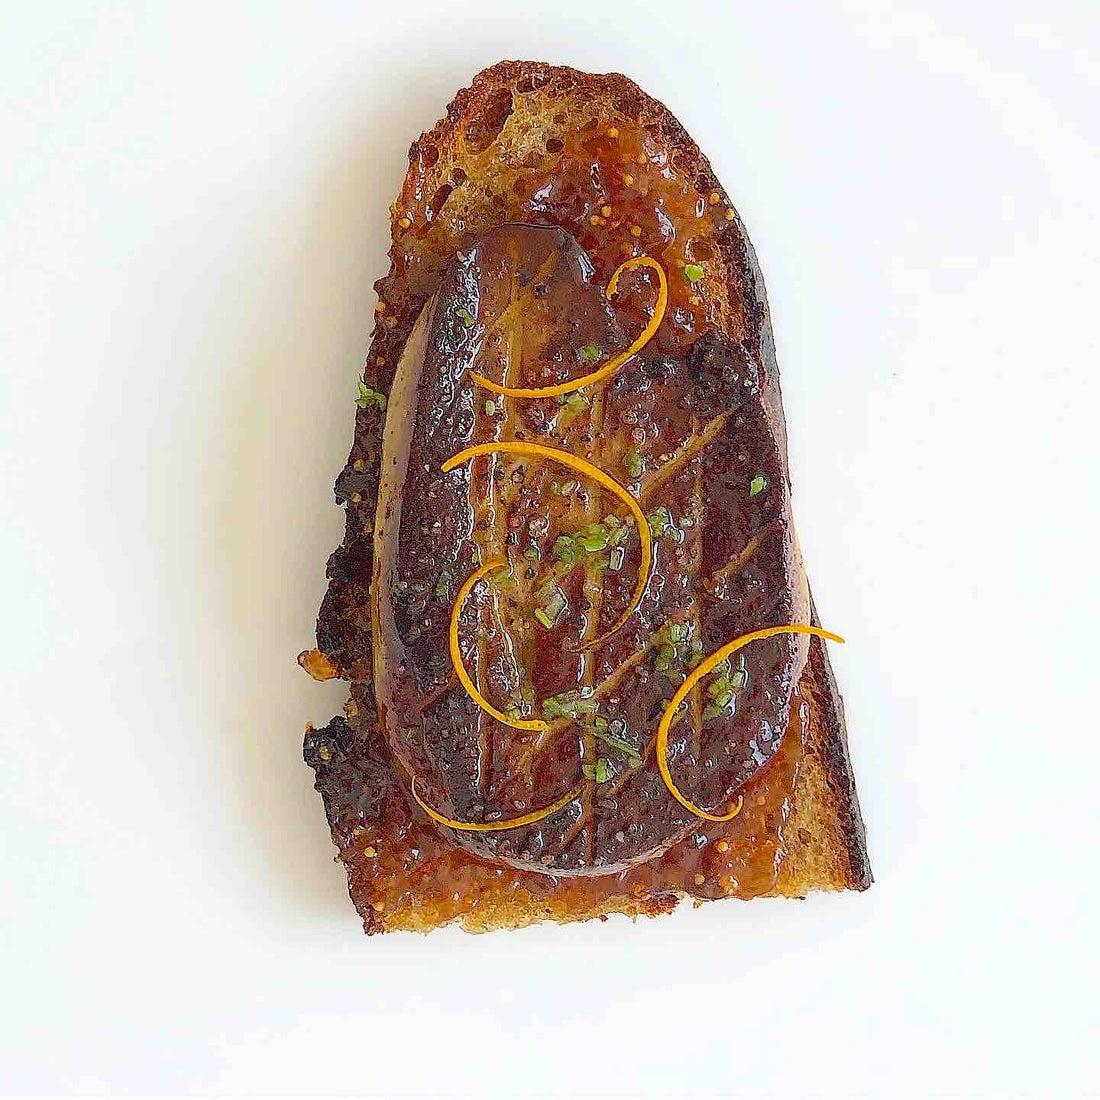 Seared Foie Gras with Fig Jam & Orange